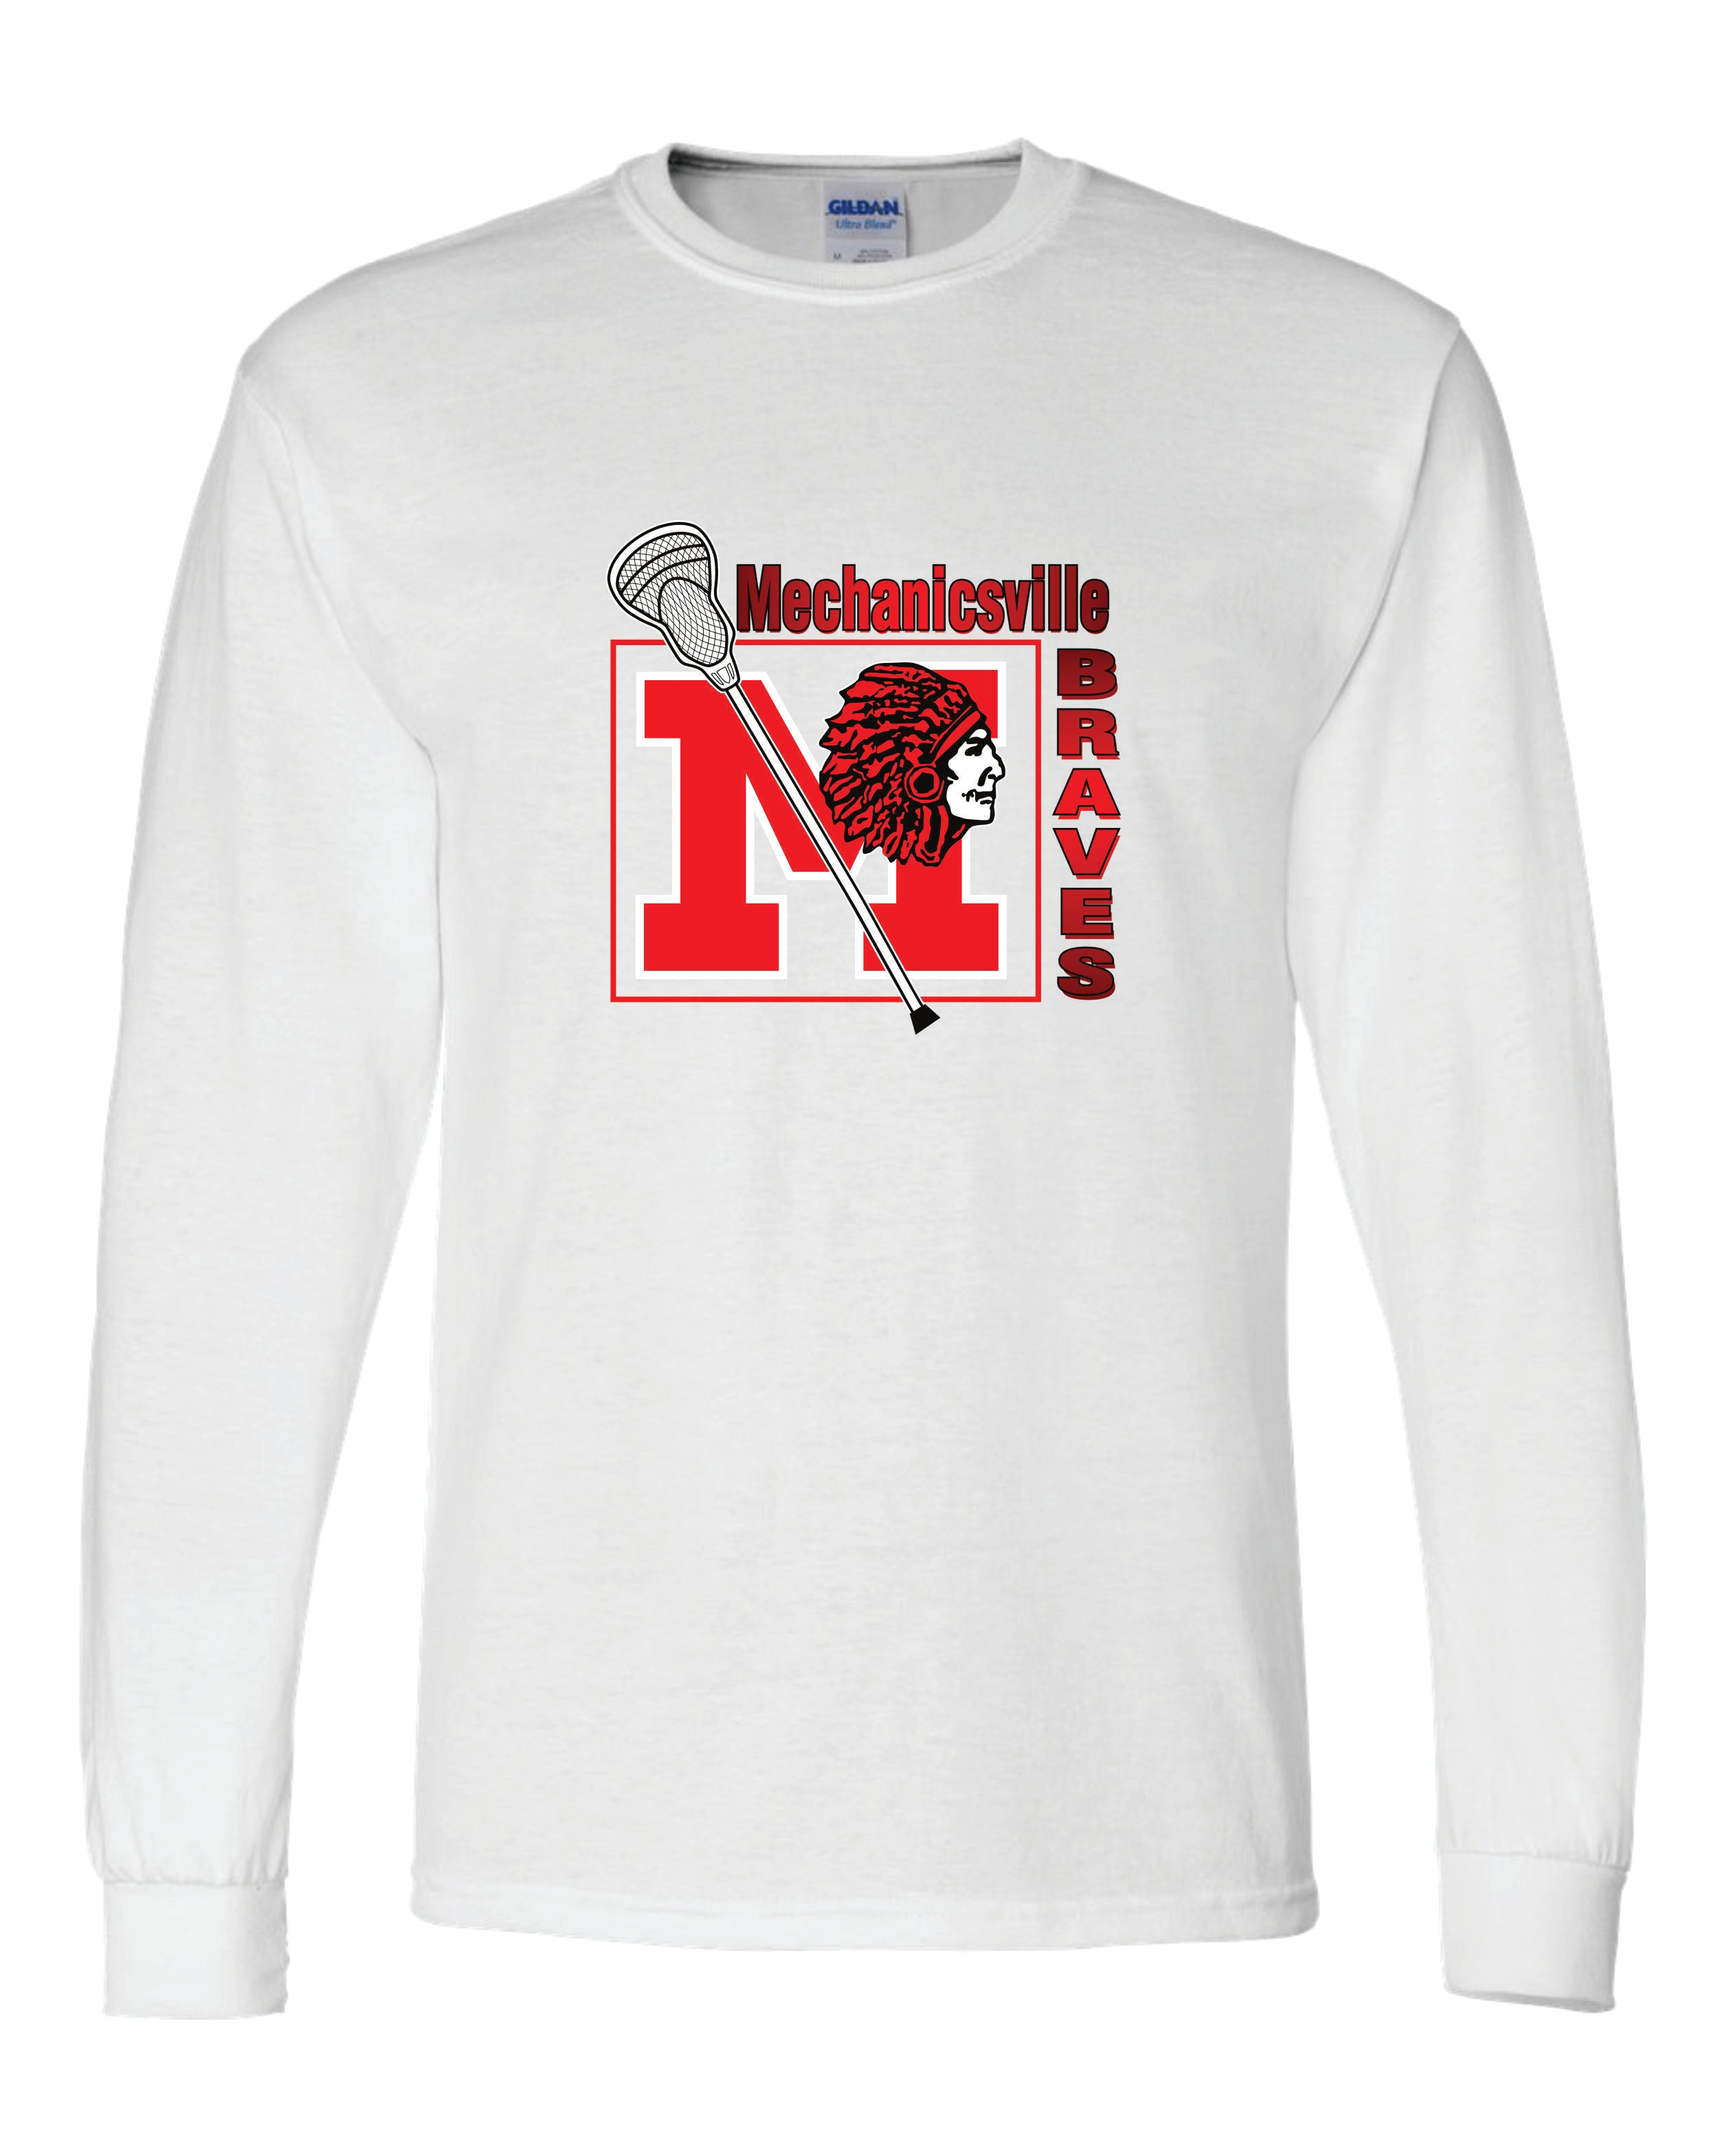 Mechanicsville Braves 50/50 Long Sleeve T-Shirts - LAX